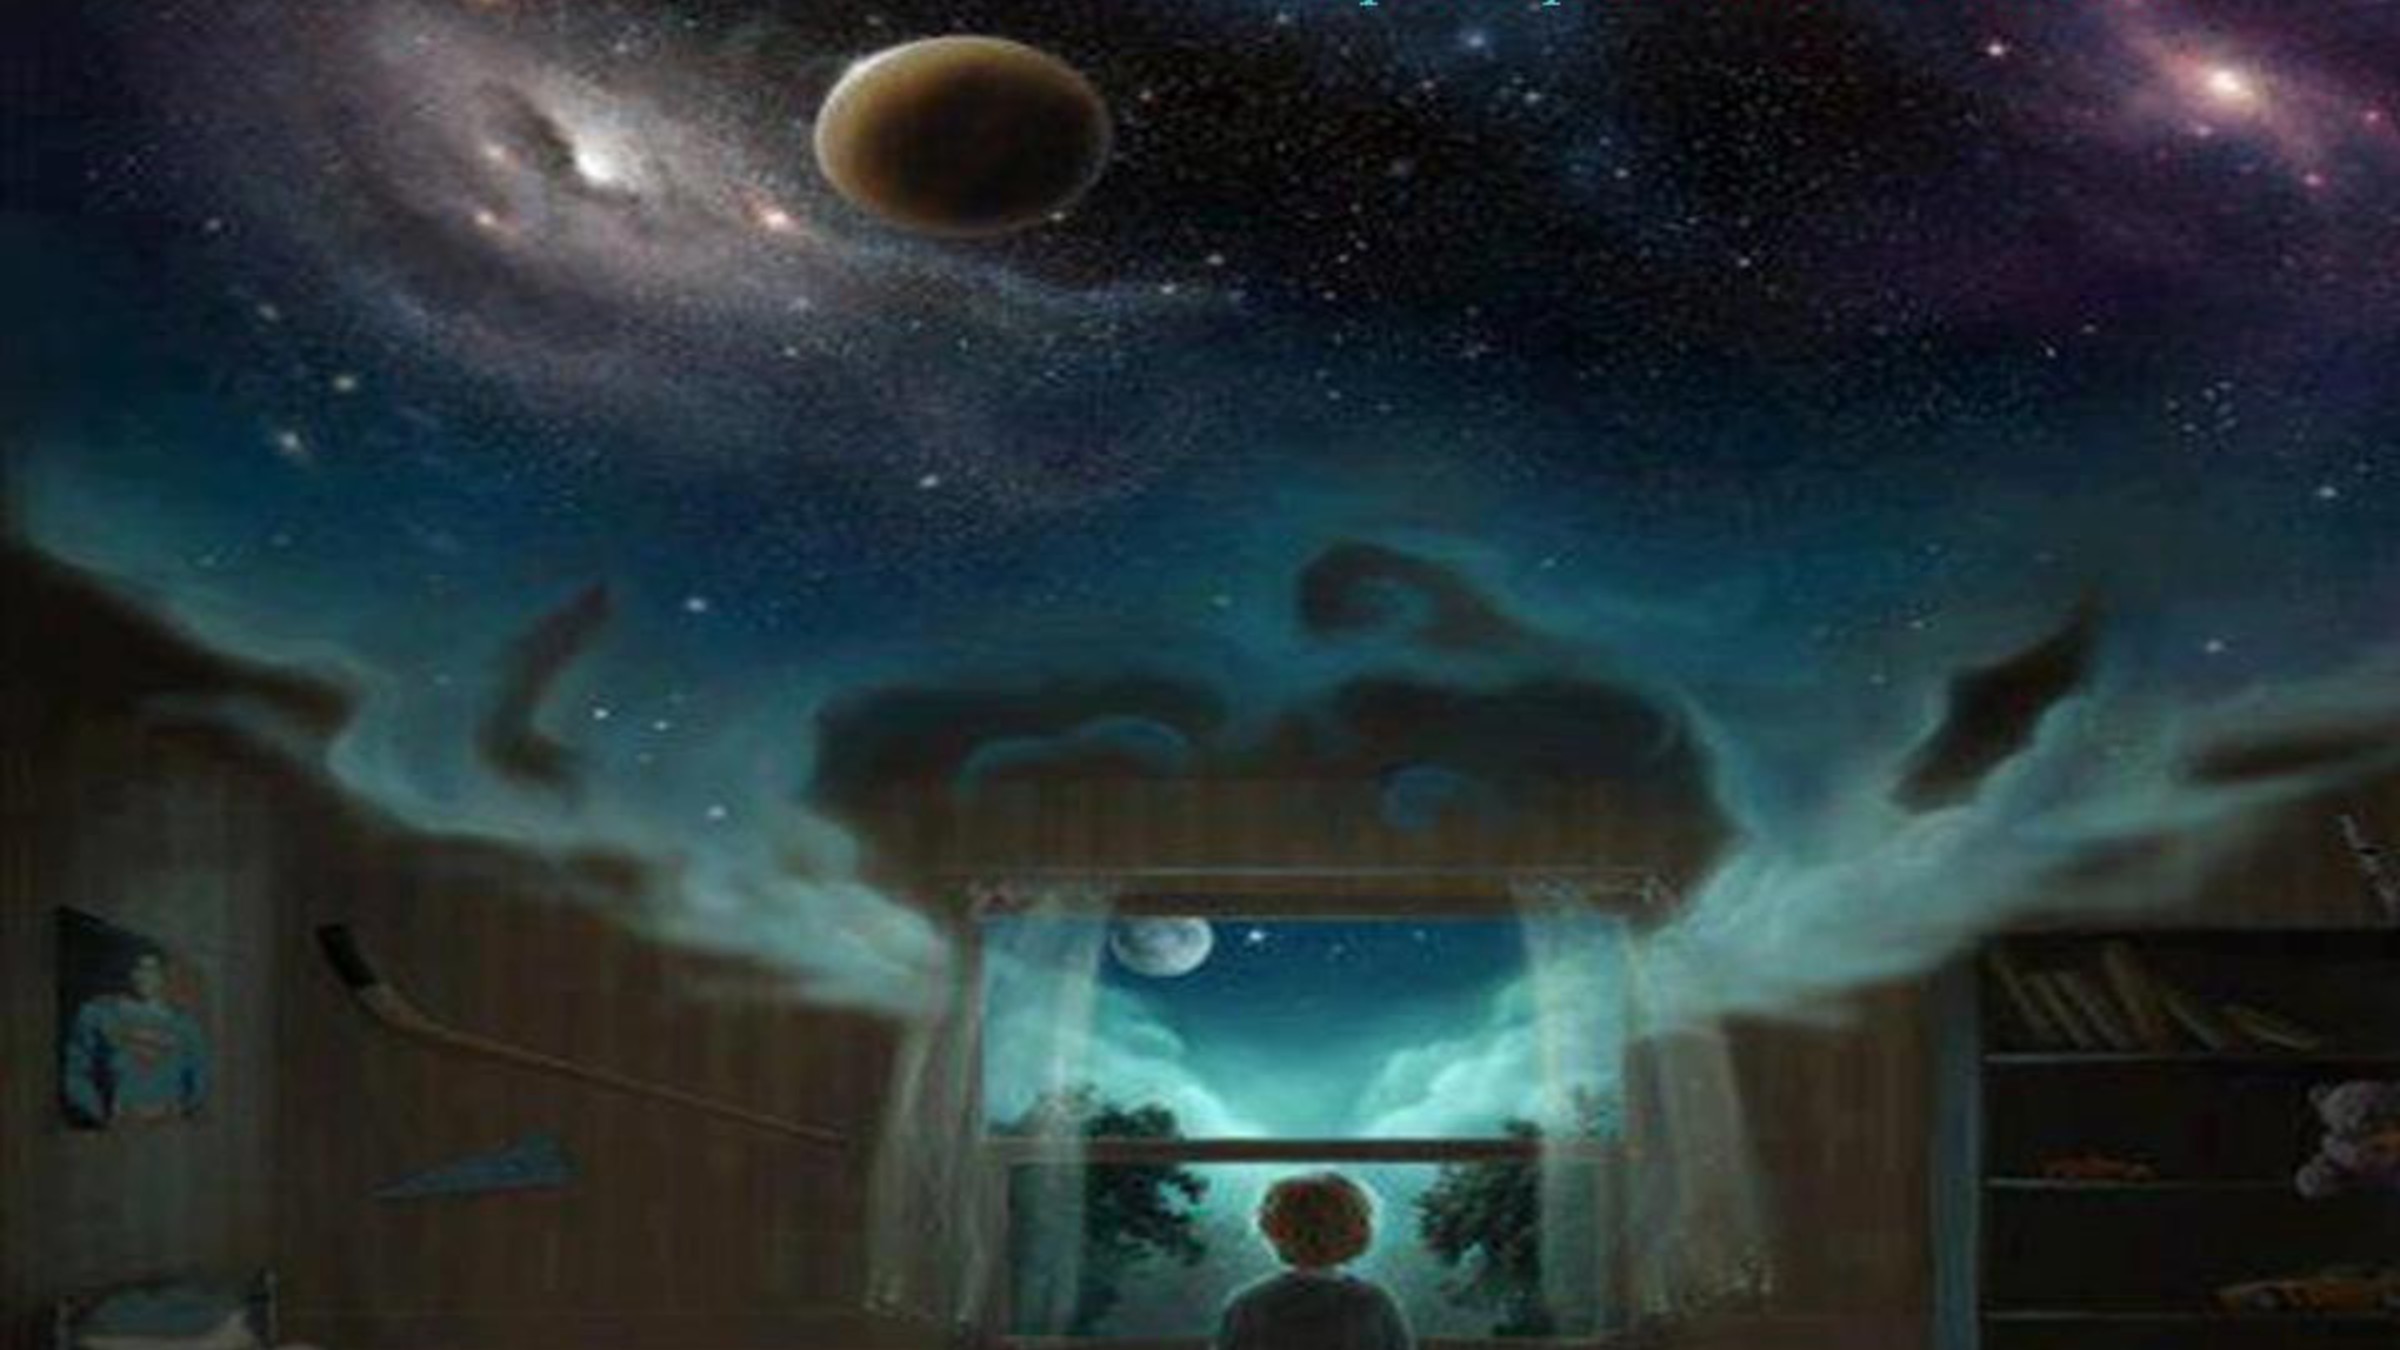 2400x1350 Science fiction artwork dreamscene wallpaper